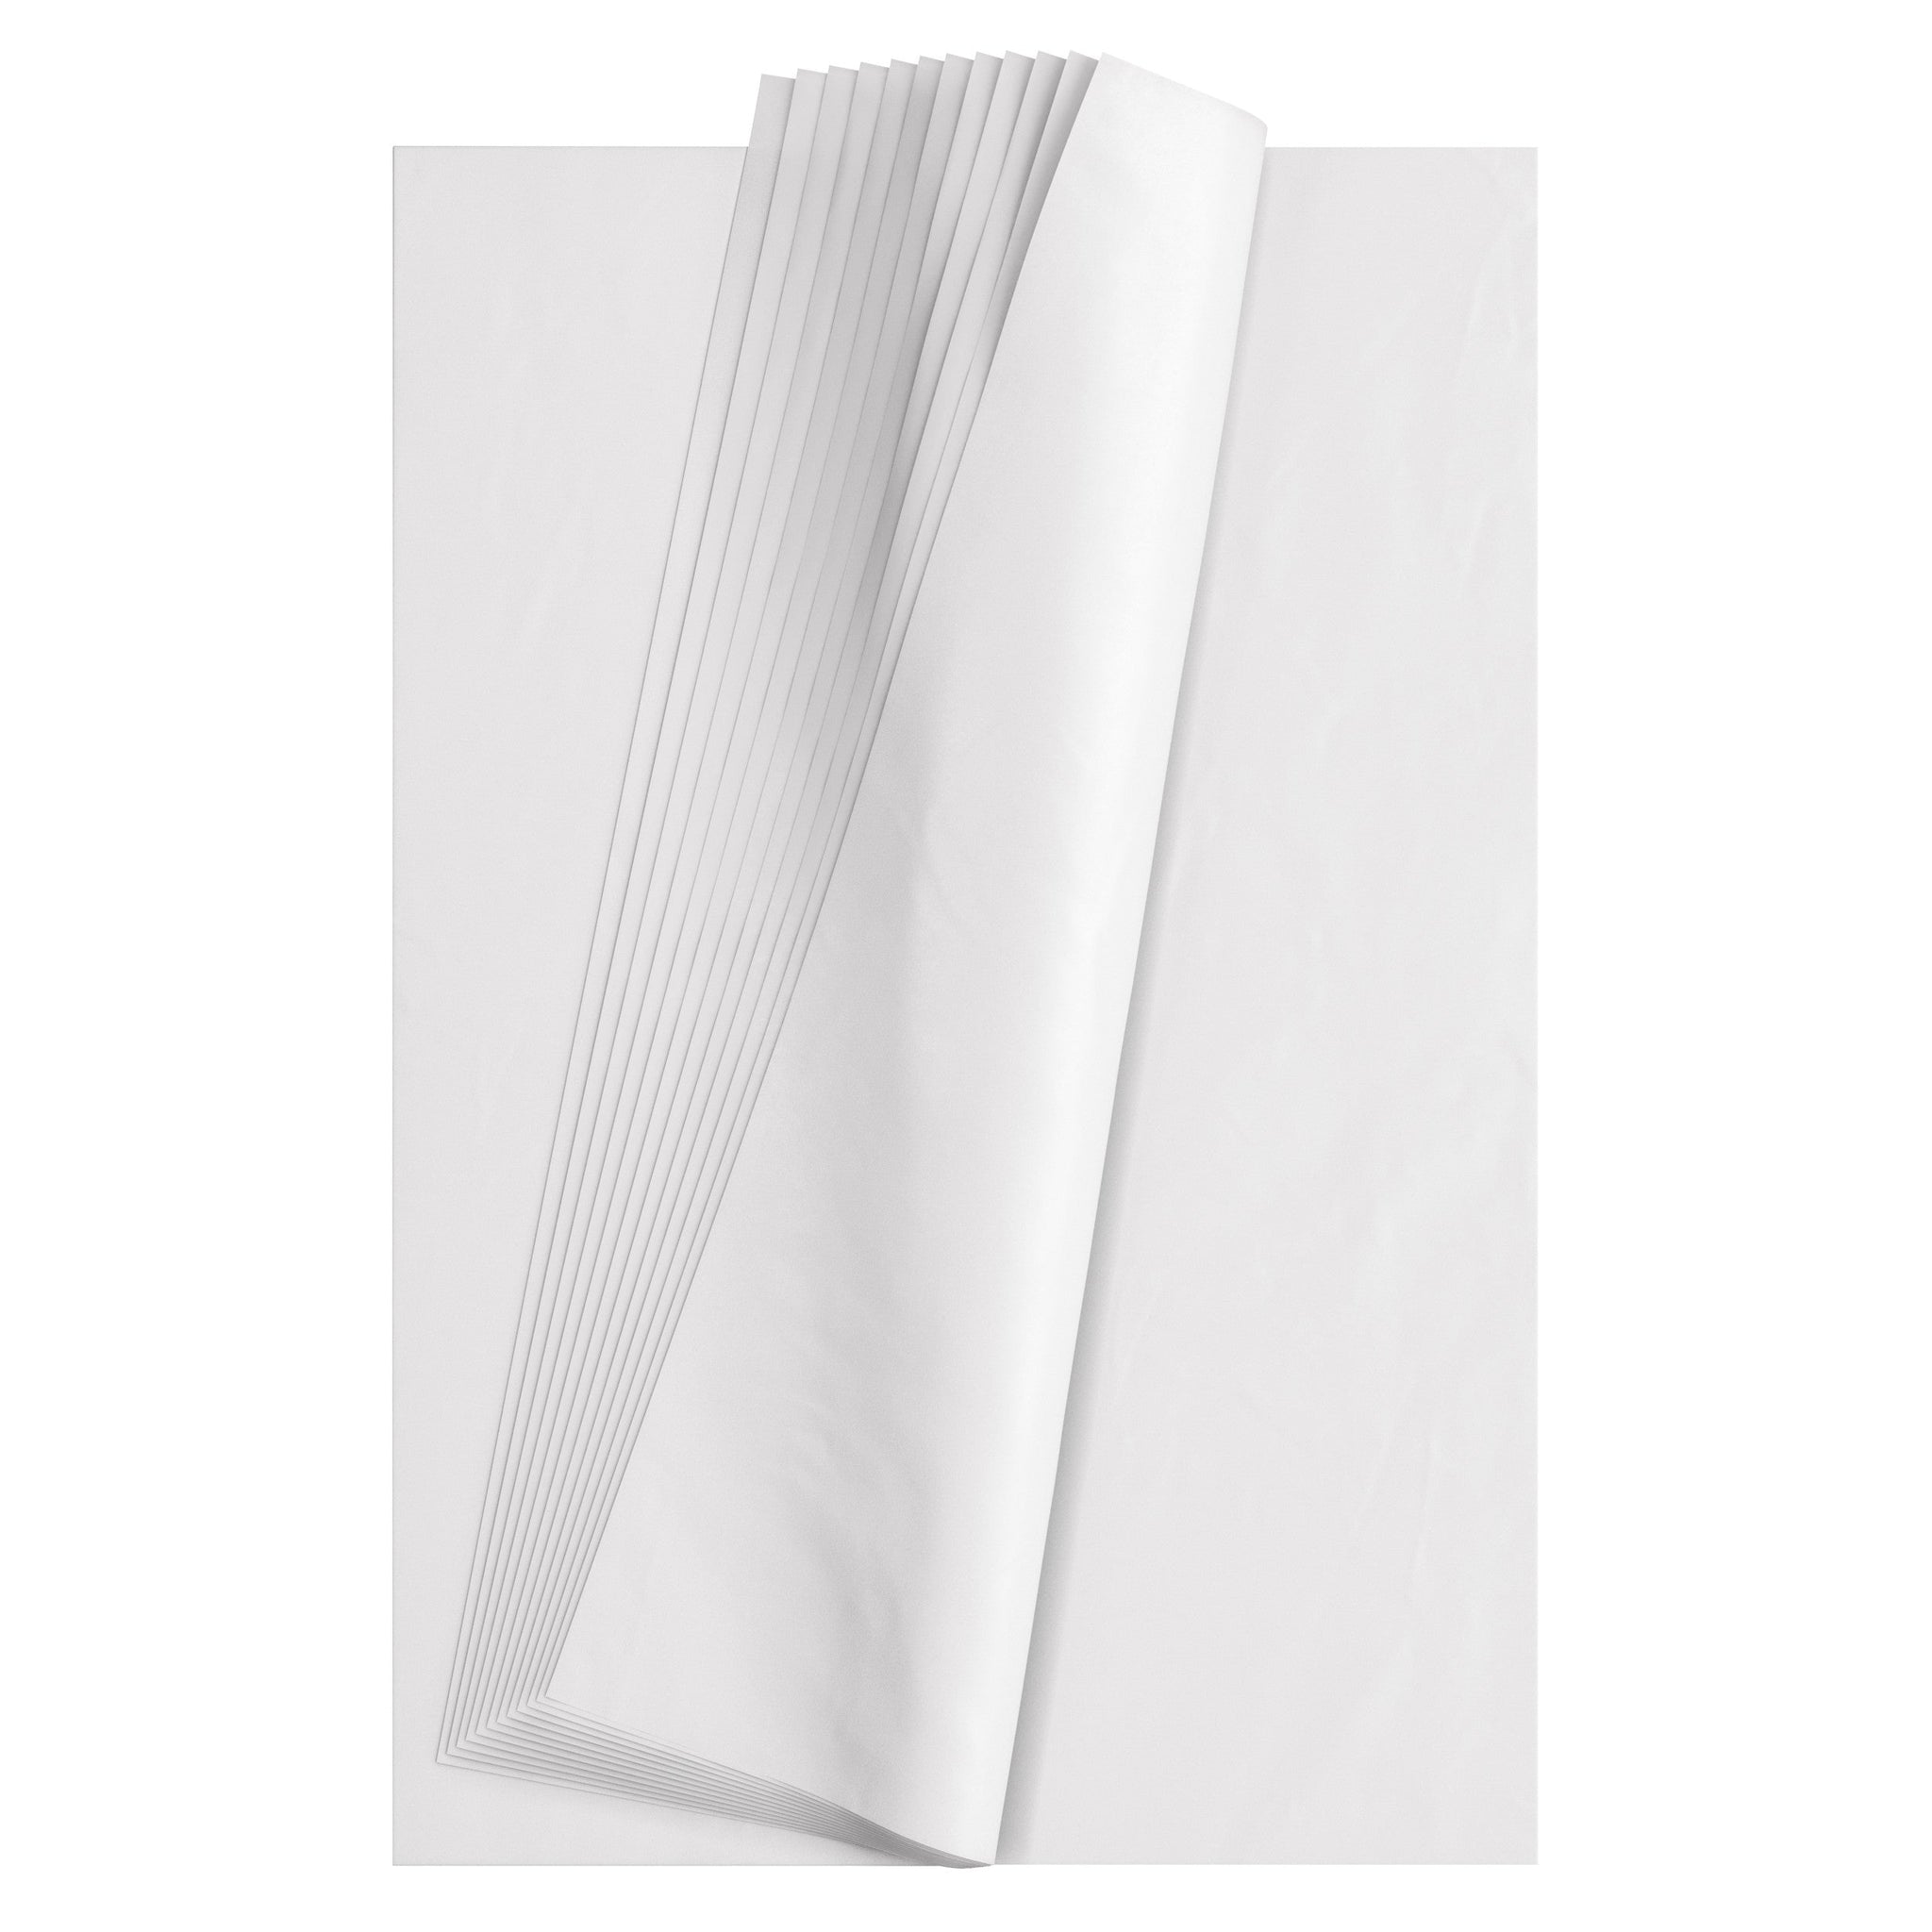 Basic Solid White Bulk Tissue Paper 15 x 20 - 100 Sheets